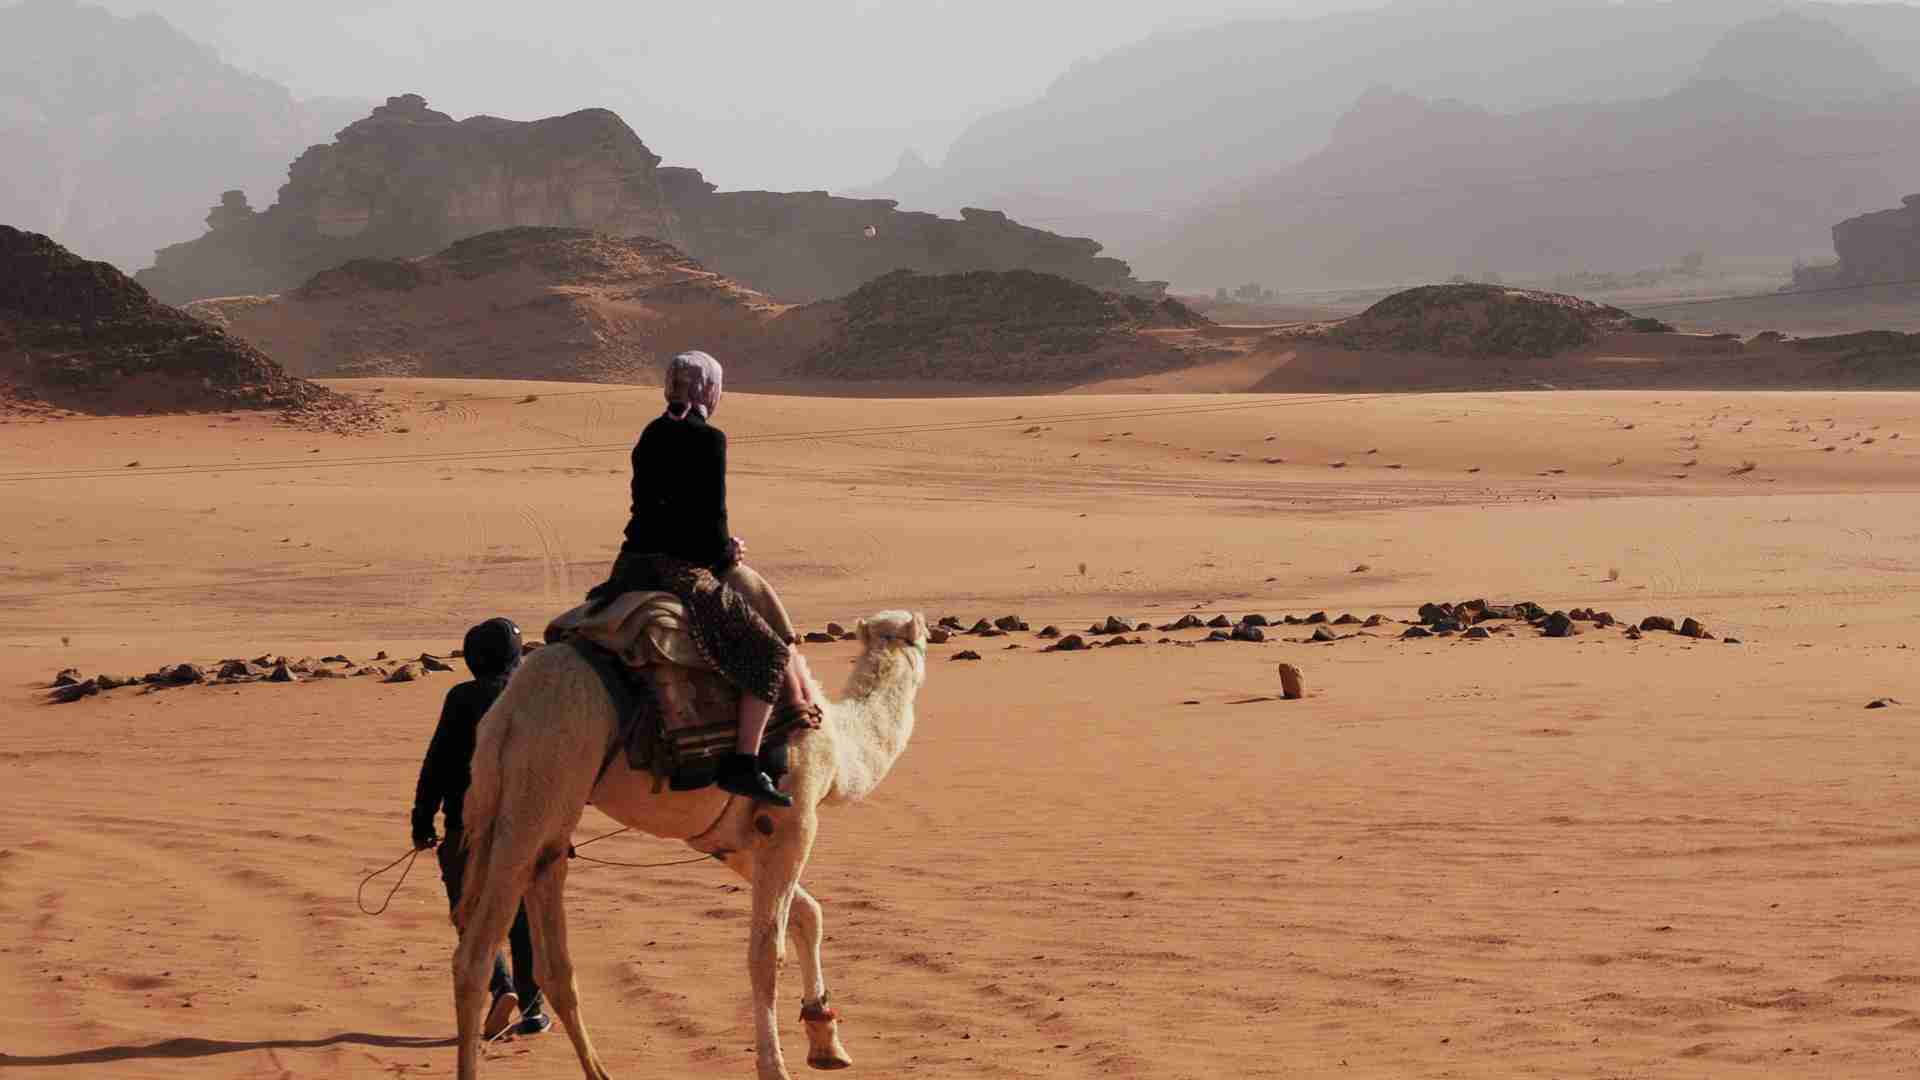 riding a camel across desert in jordan